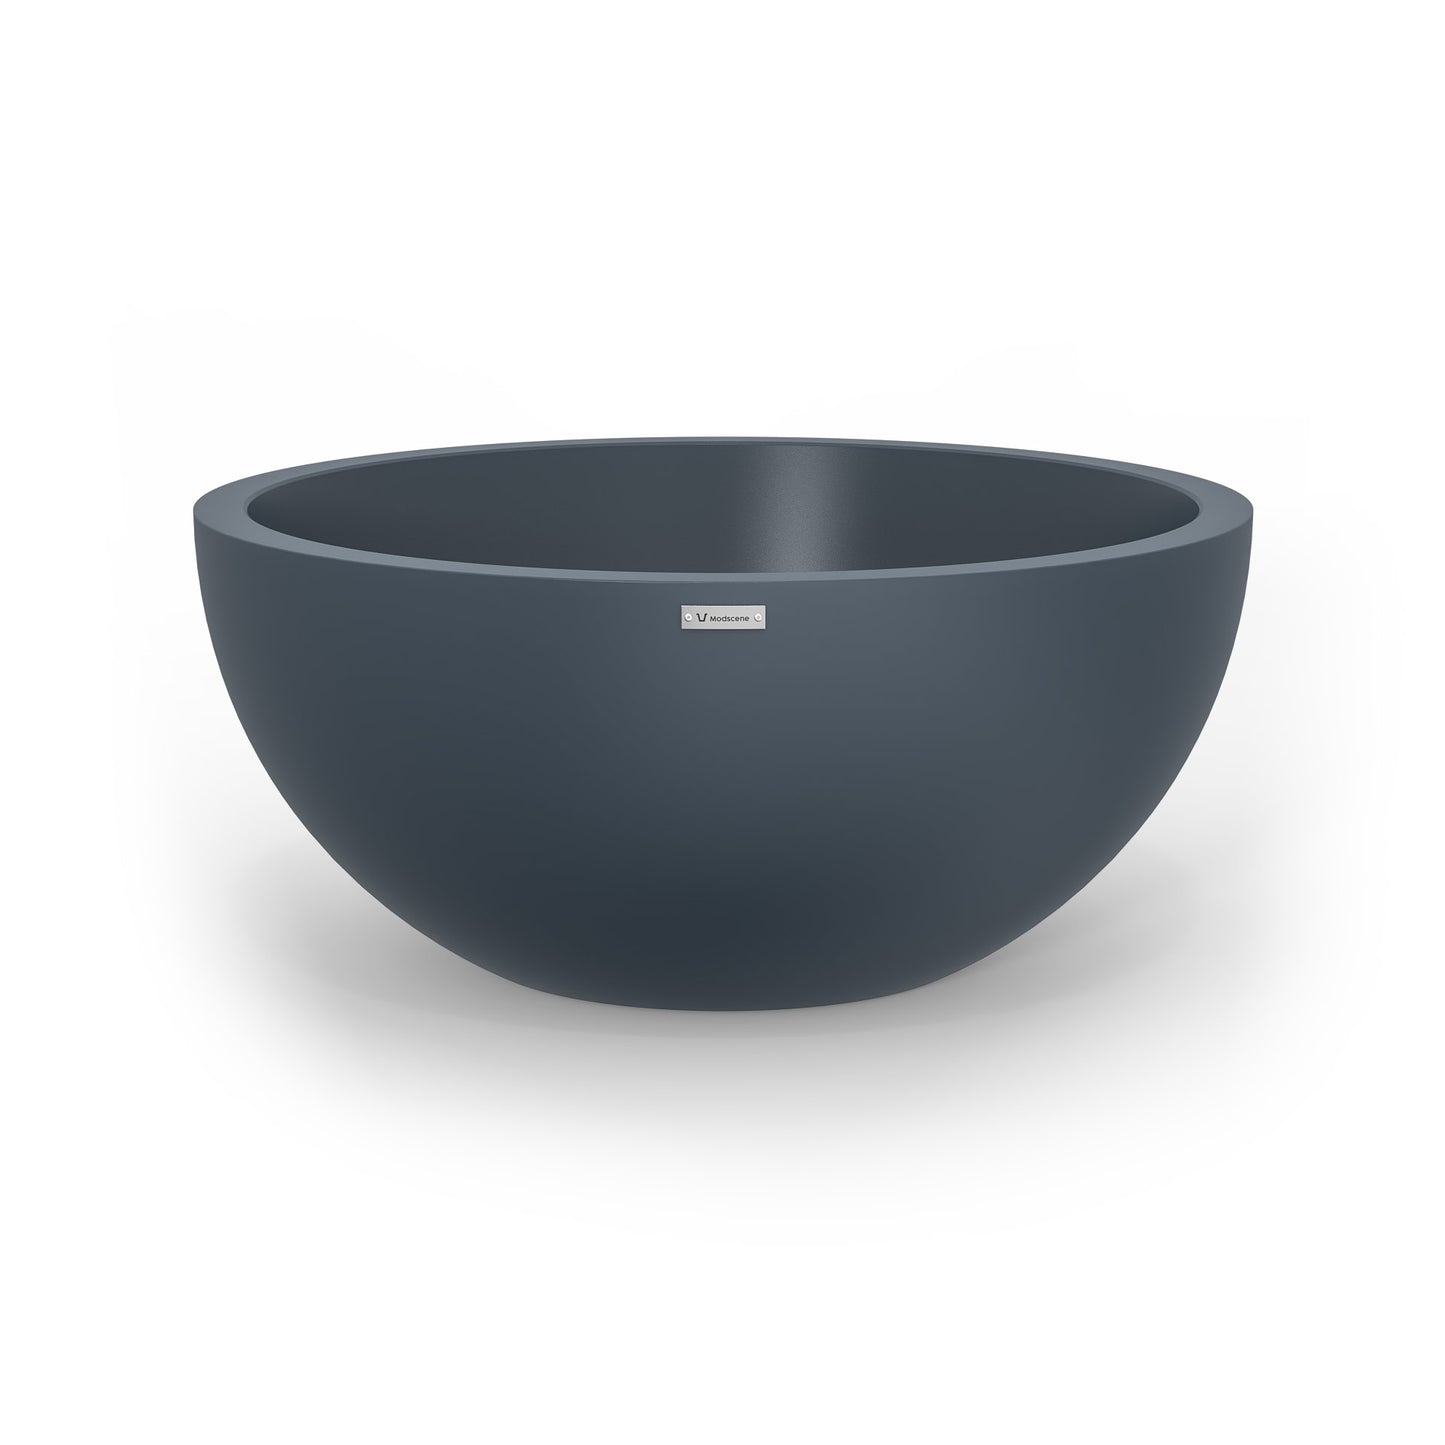 A Modscene planter bowl in a dark grey colour.